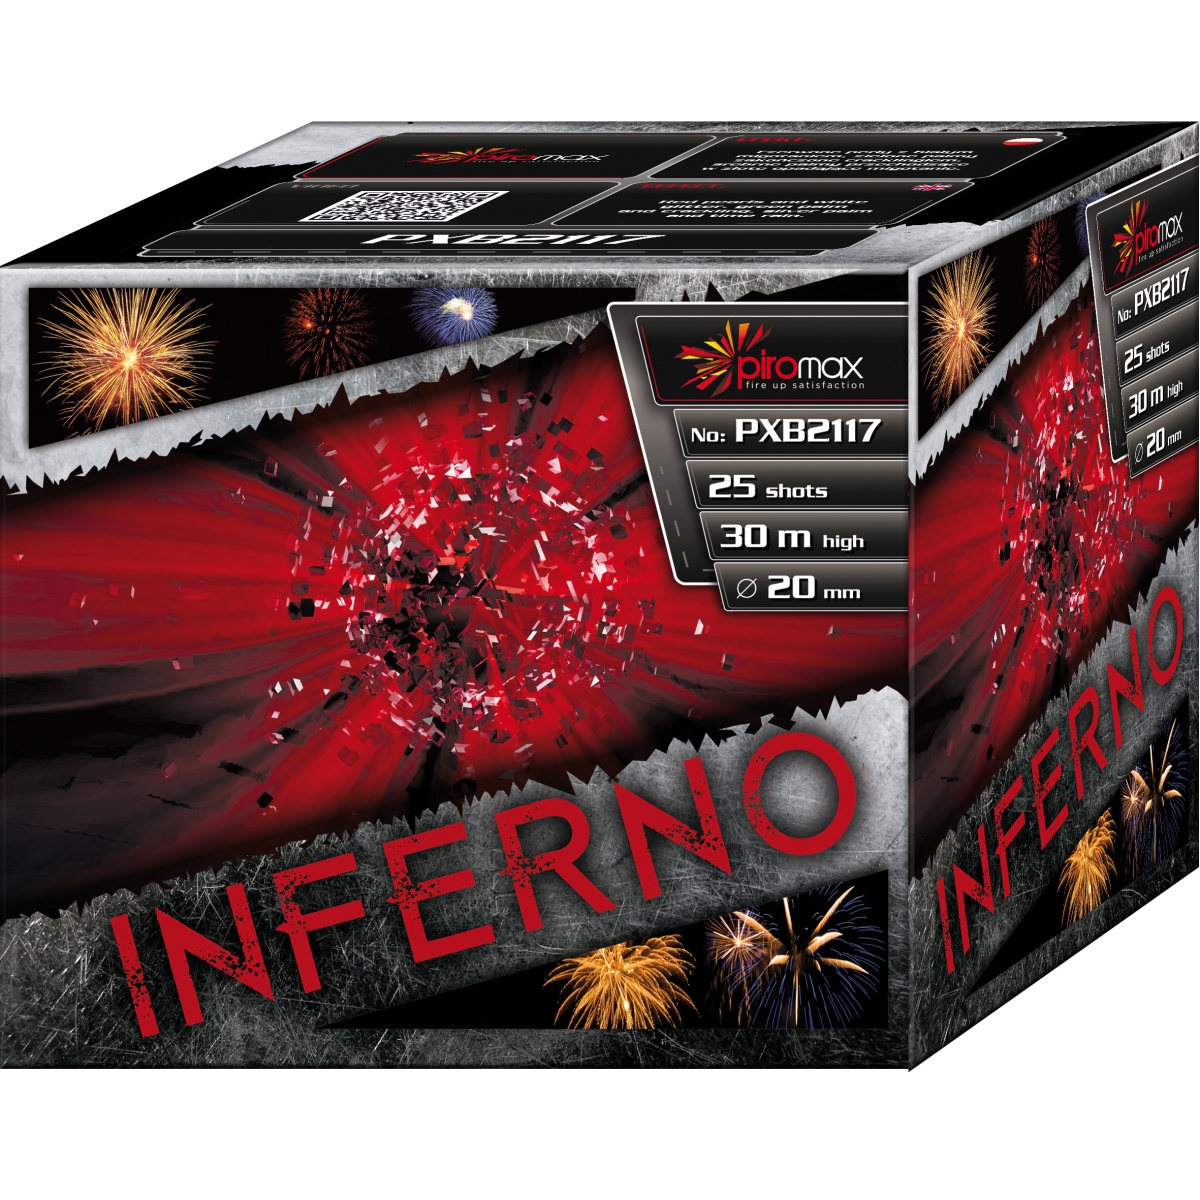 PXB2117 Inferno